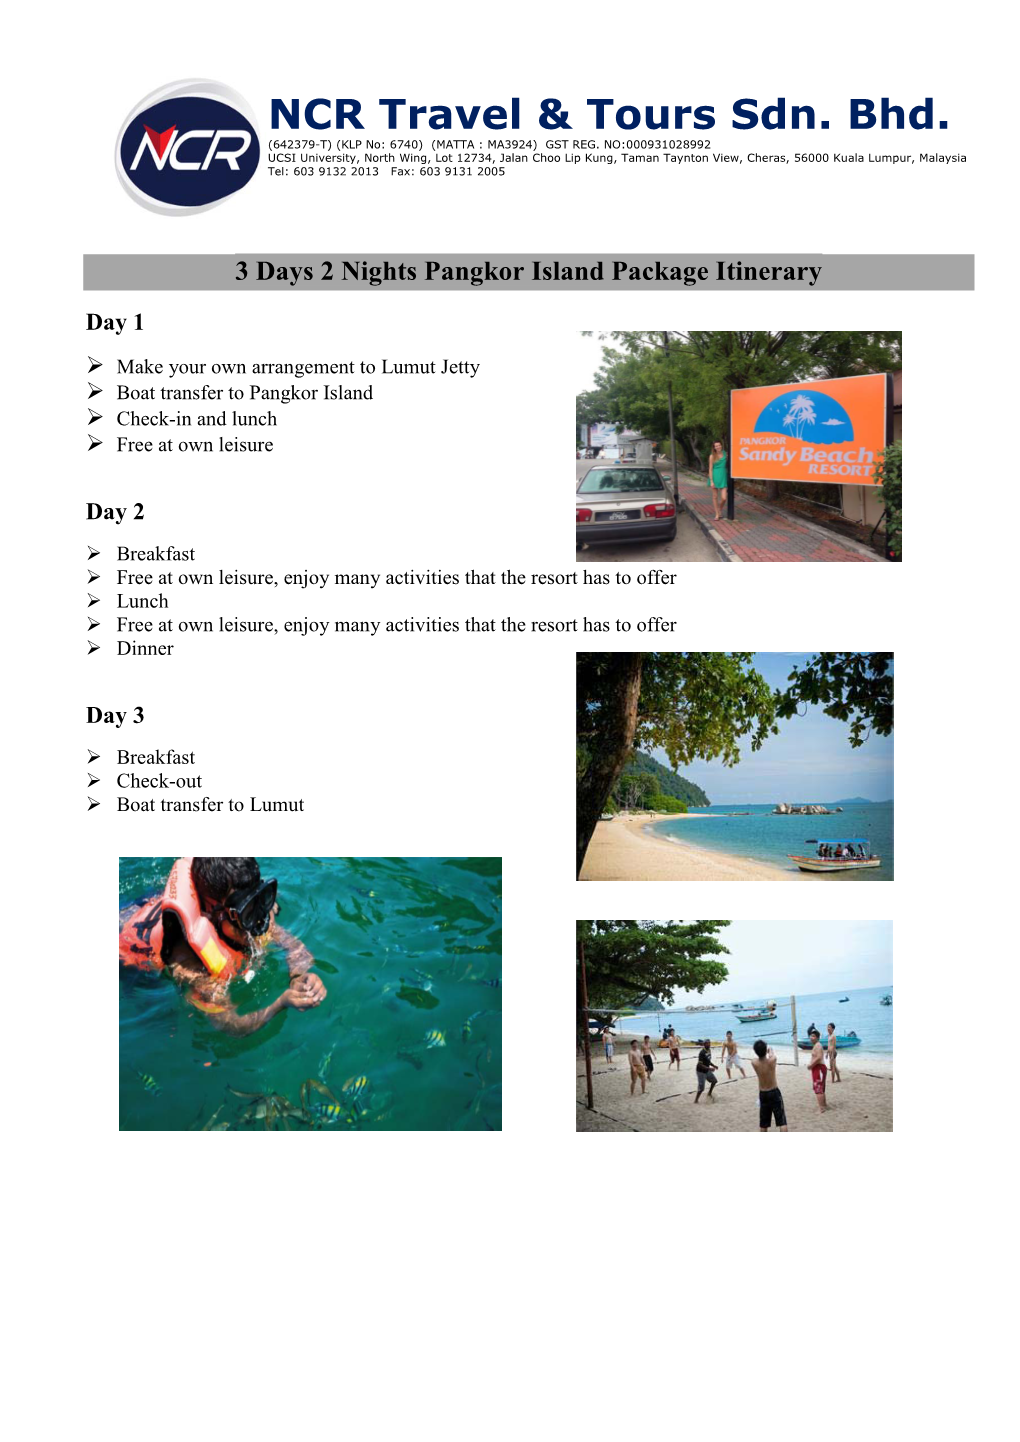 Pangkor Sandy Beach Resort Package Rate for Year 2015